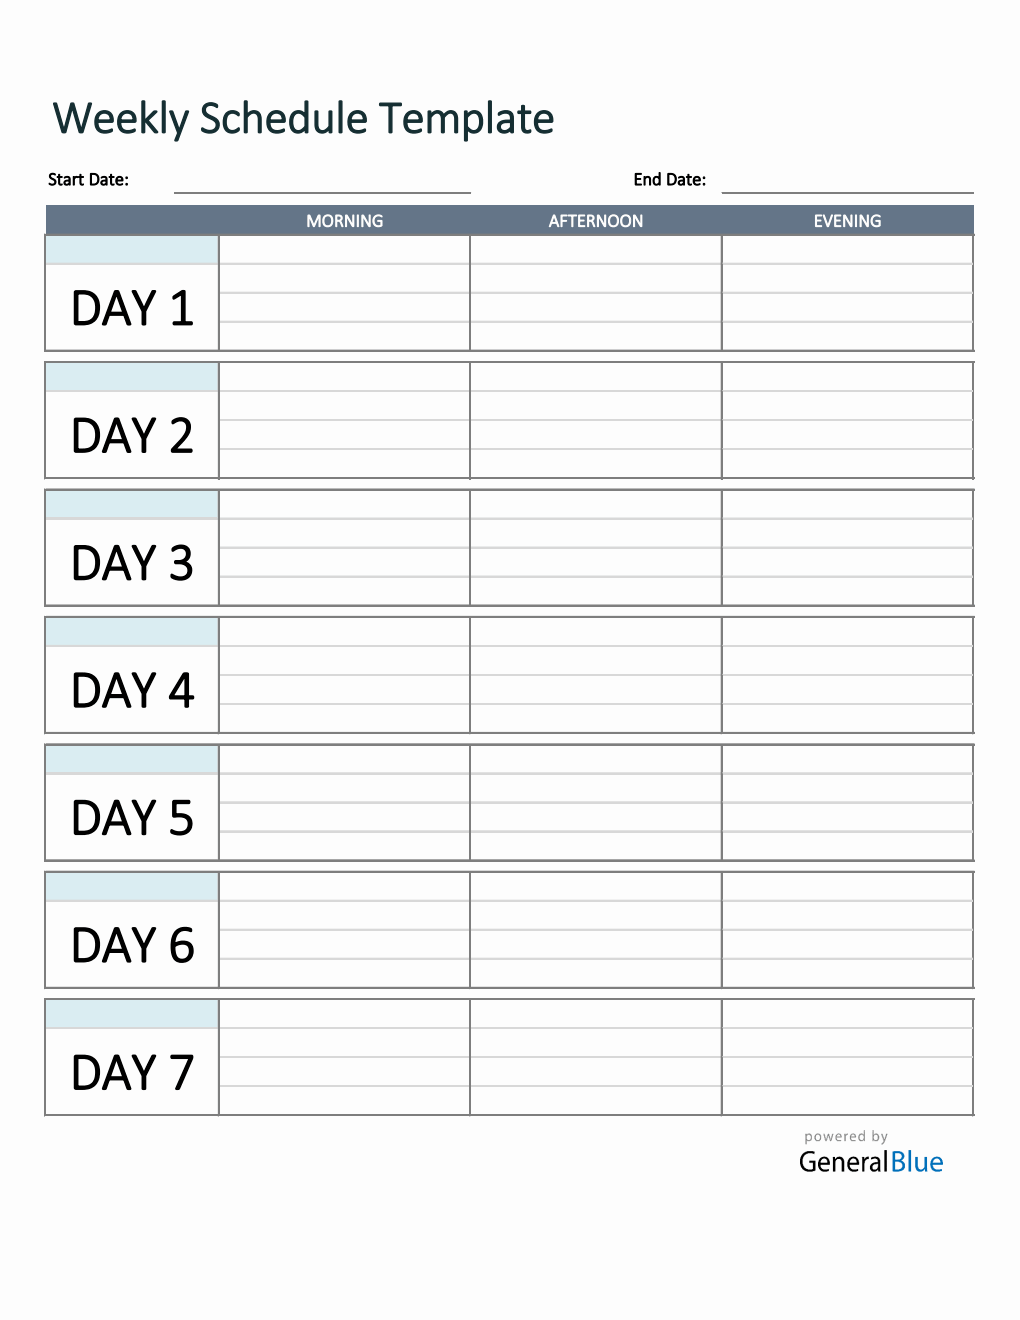 Simple Weekly Schedule Template in Excel